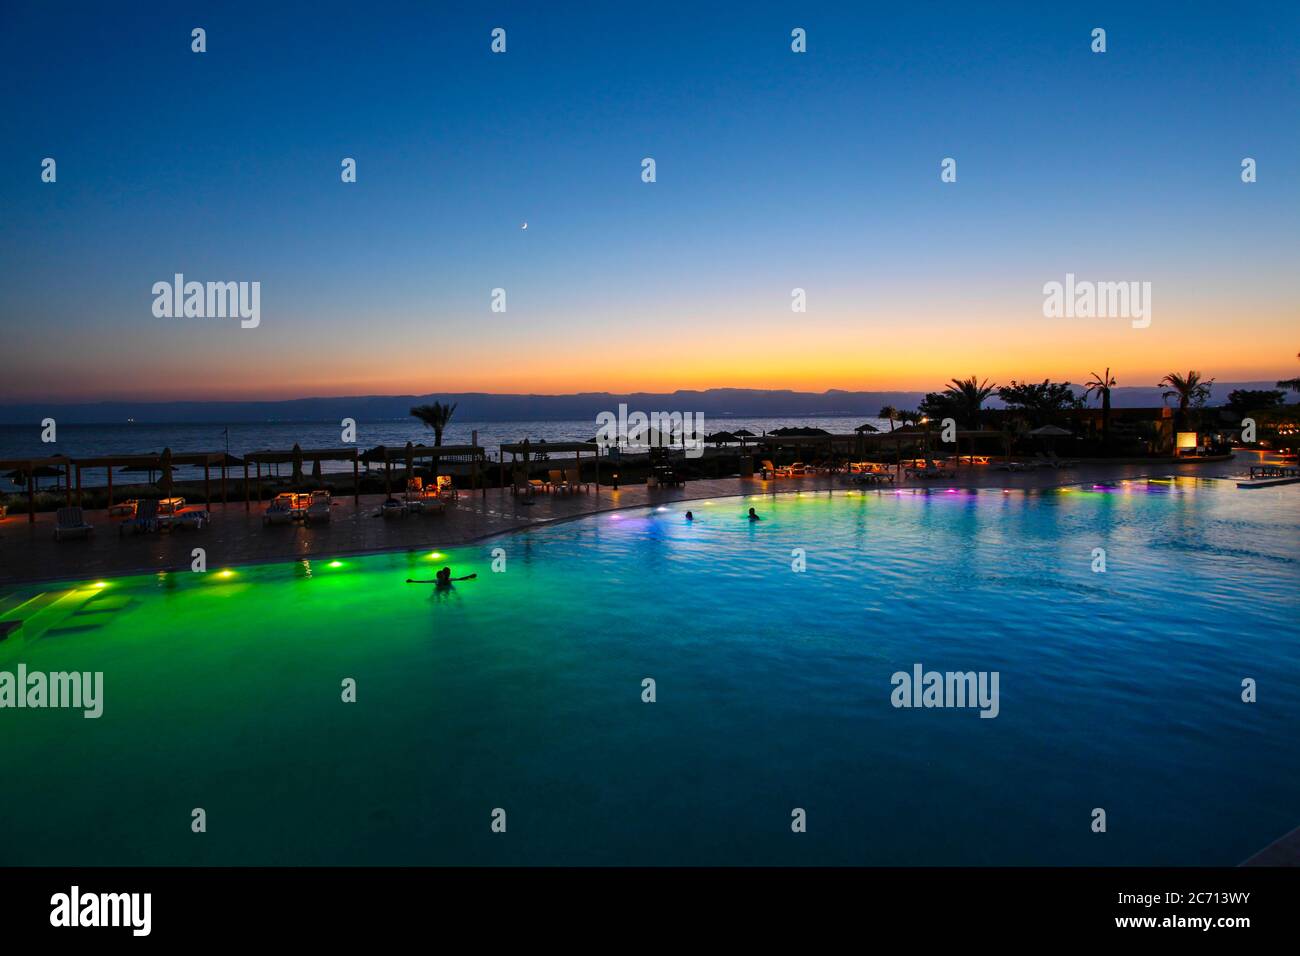 Jordan, Aqaba, Tala Bay Luxury Beach Resort. at sunset Stock Photo